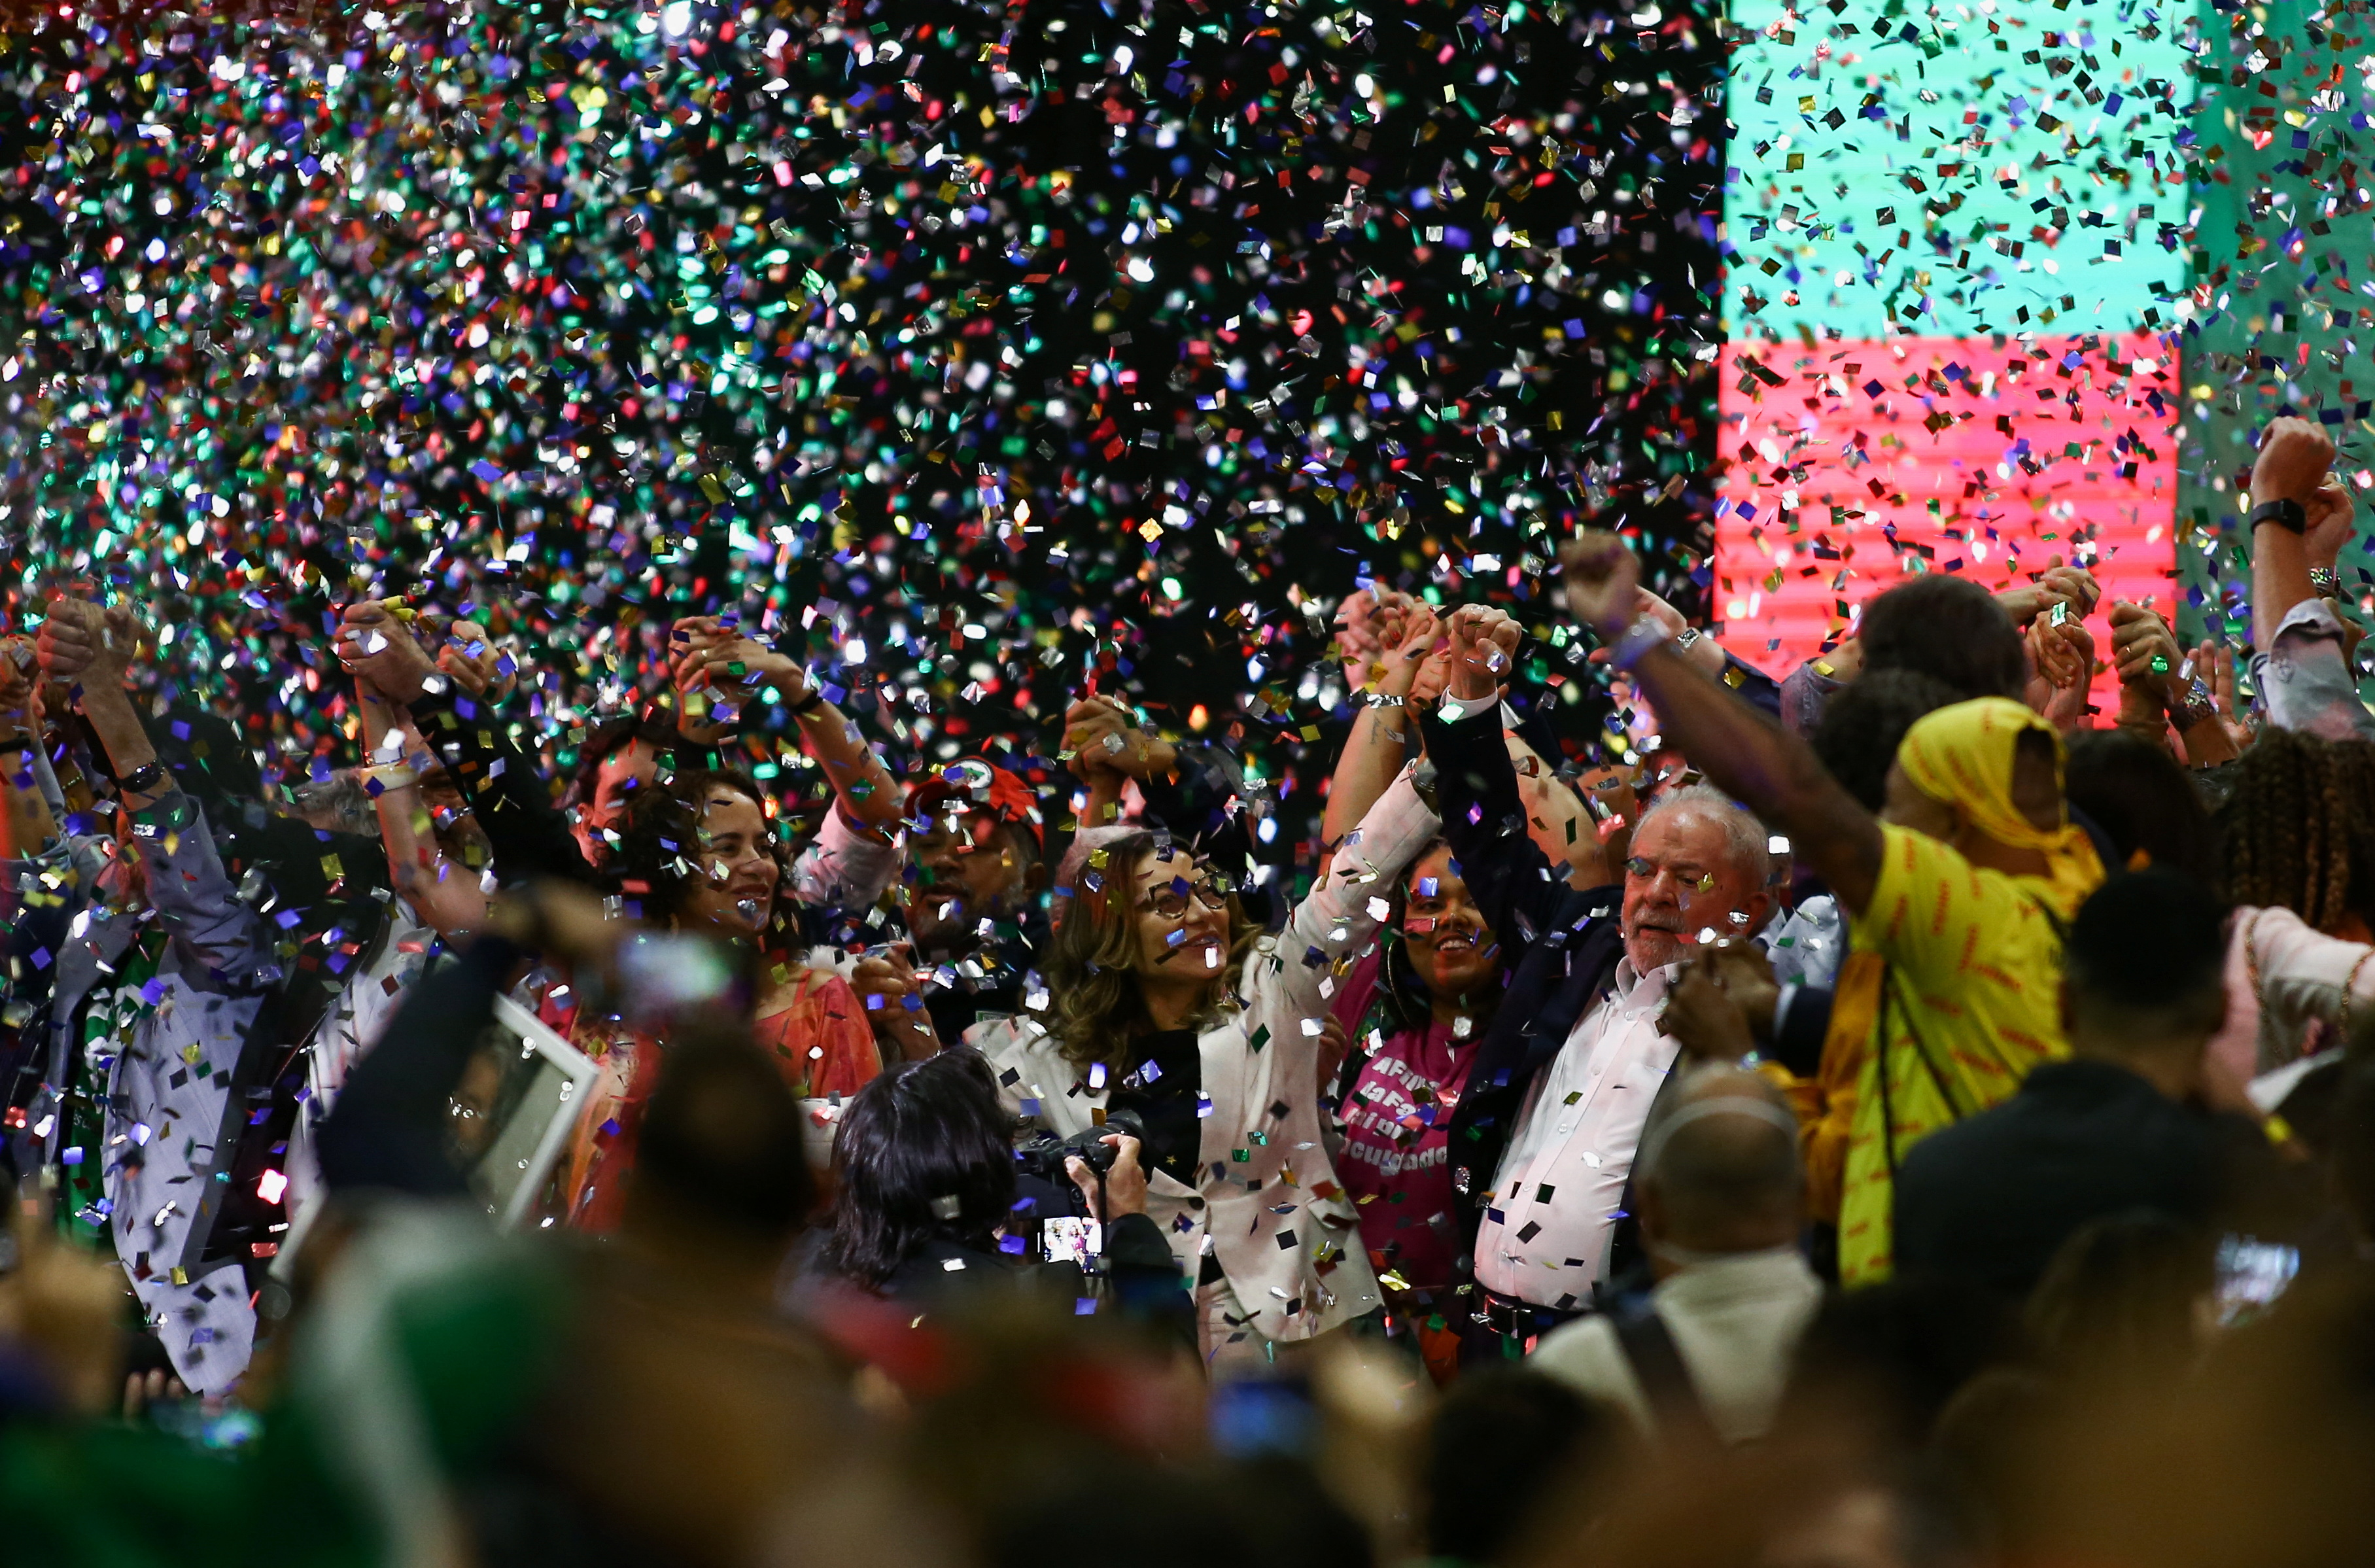 Official launch of the coalition "Vamos Juntos Pelo Brasil", in Sao Paulo